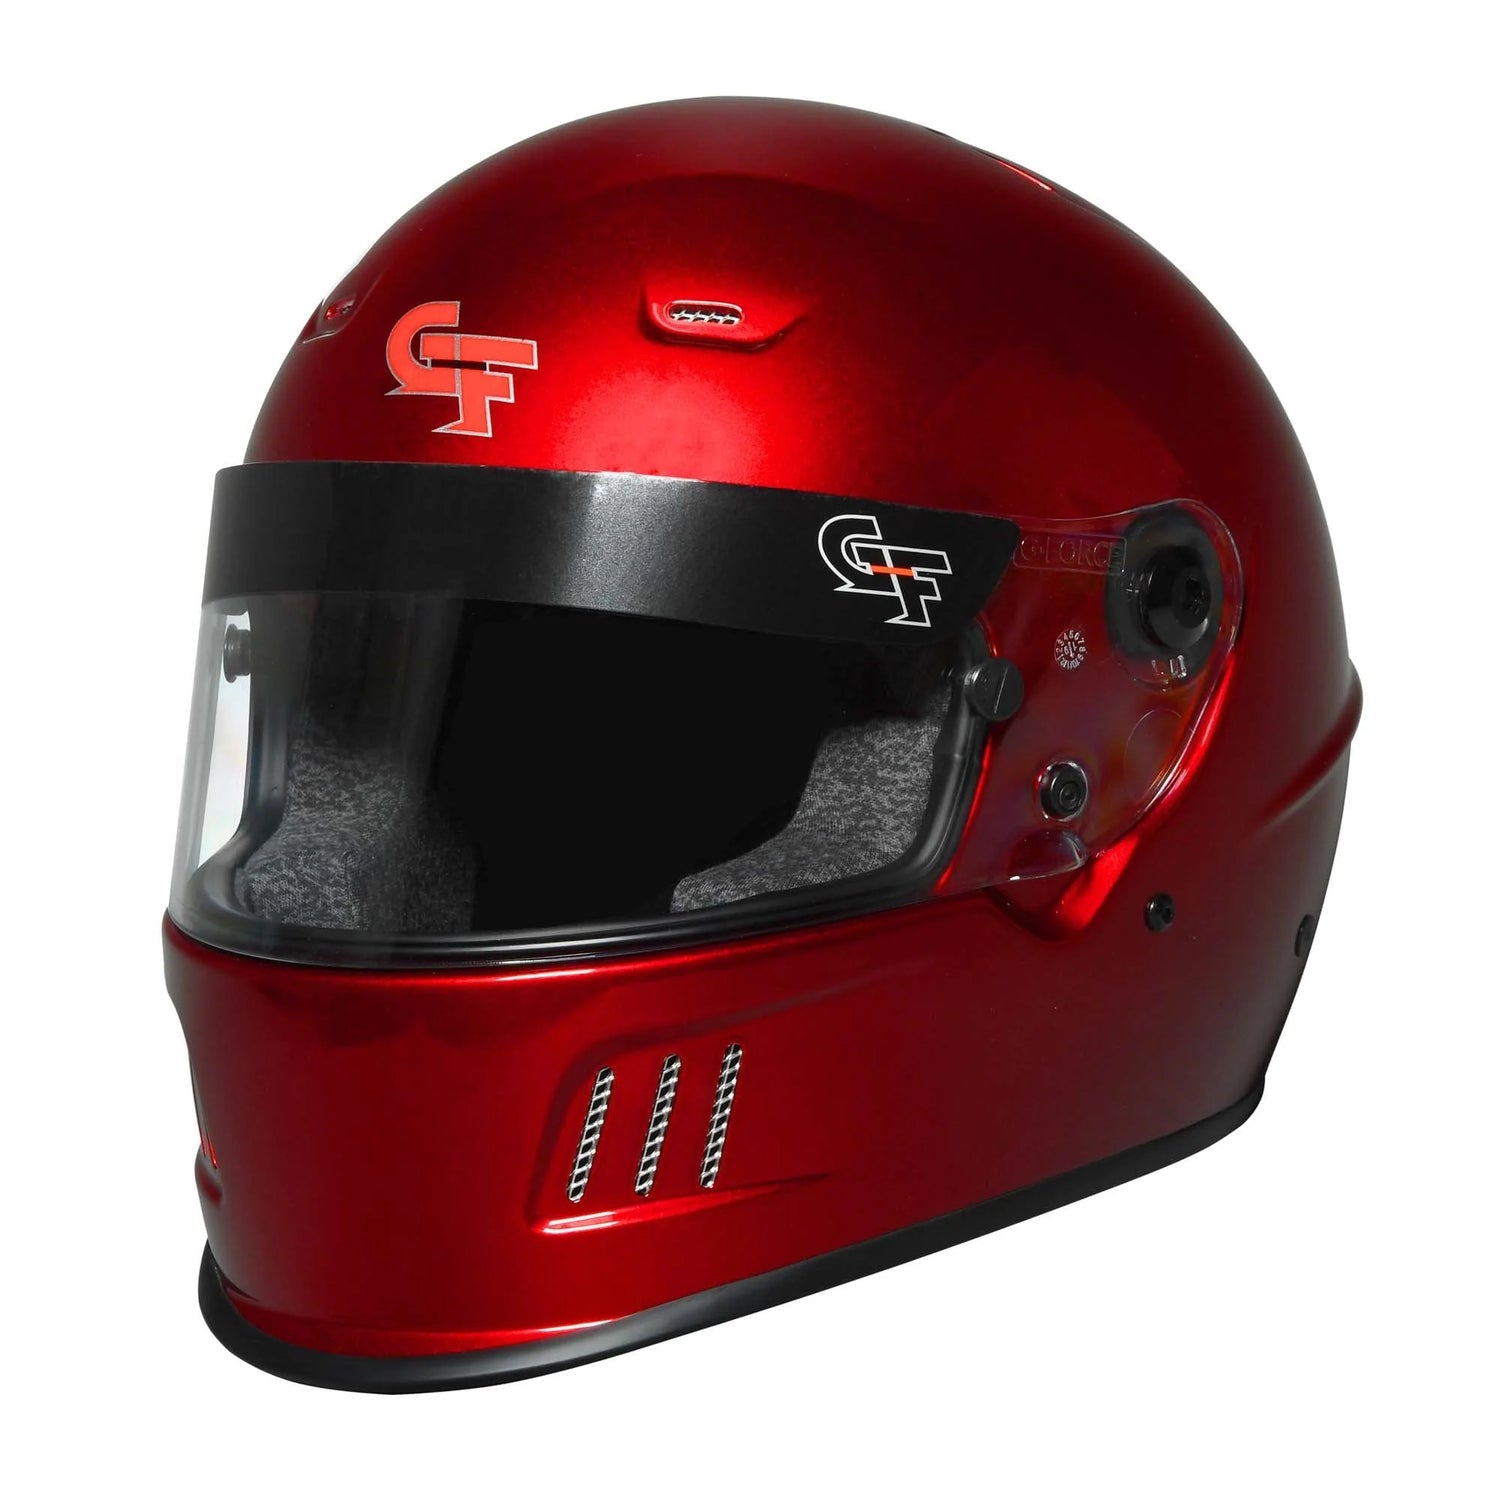 G-Force Racing Helmets